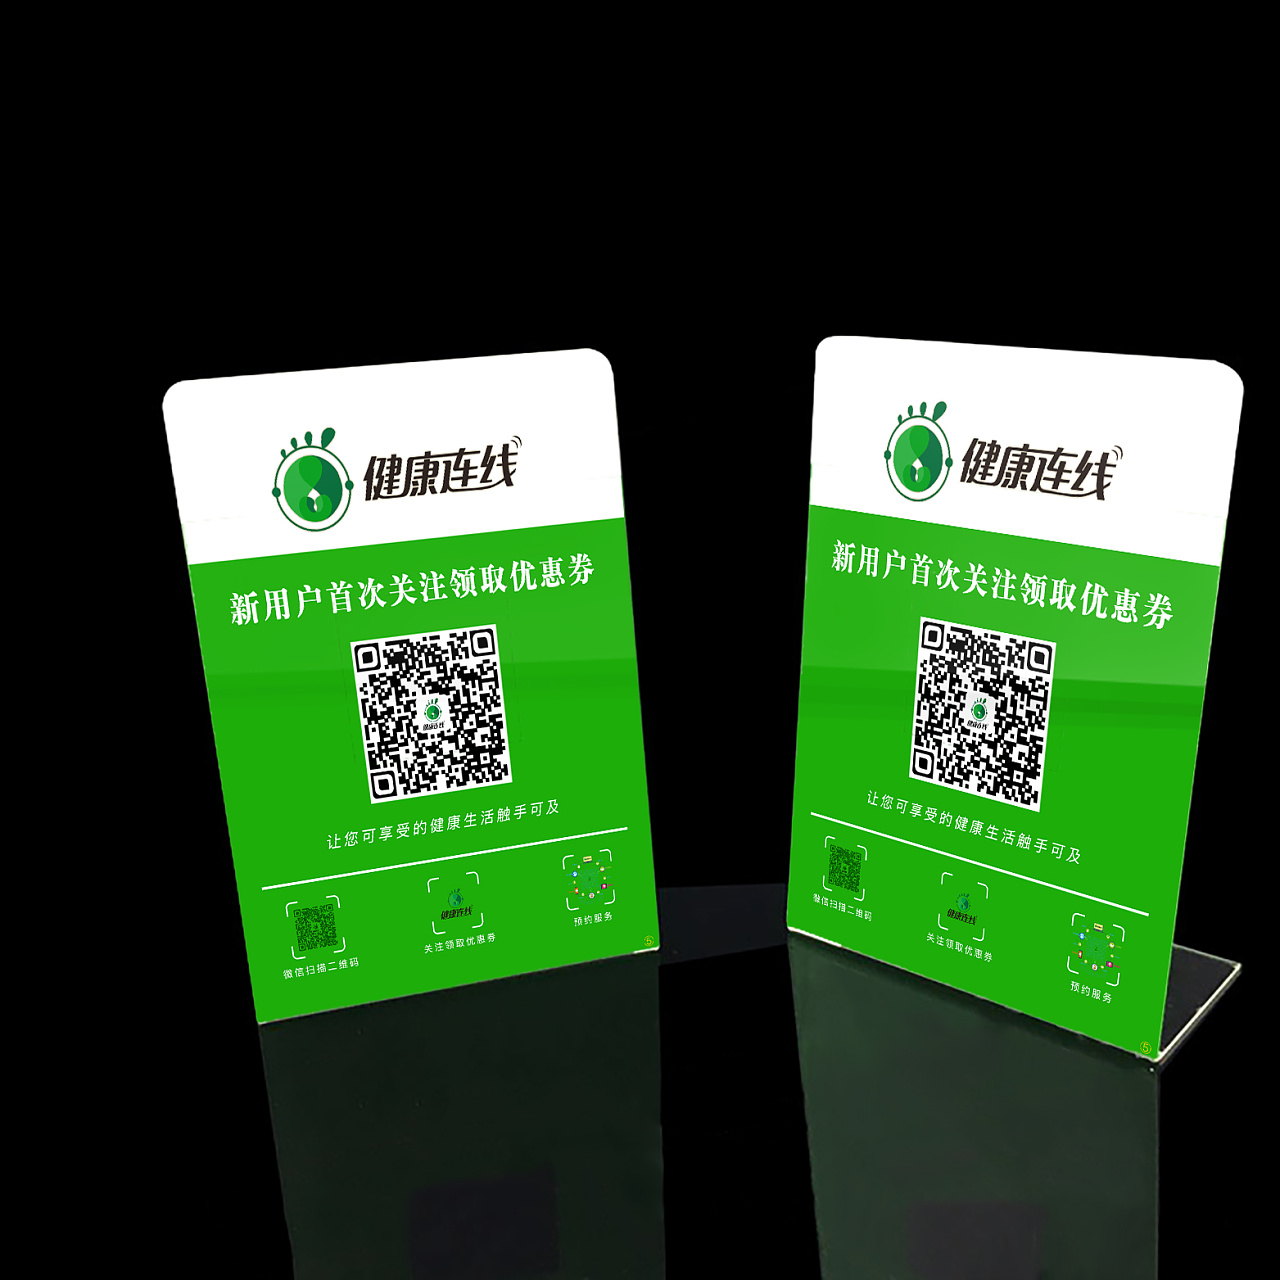 「iPhone 卡緊收」國際首站選台灣！台新手付、中國信託搶第一波服務 | 科技新報 | LINE TODAY